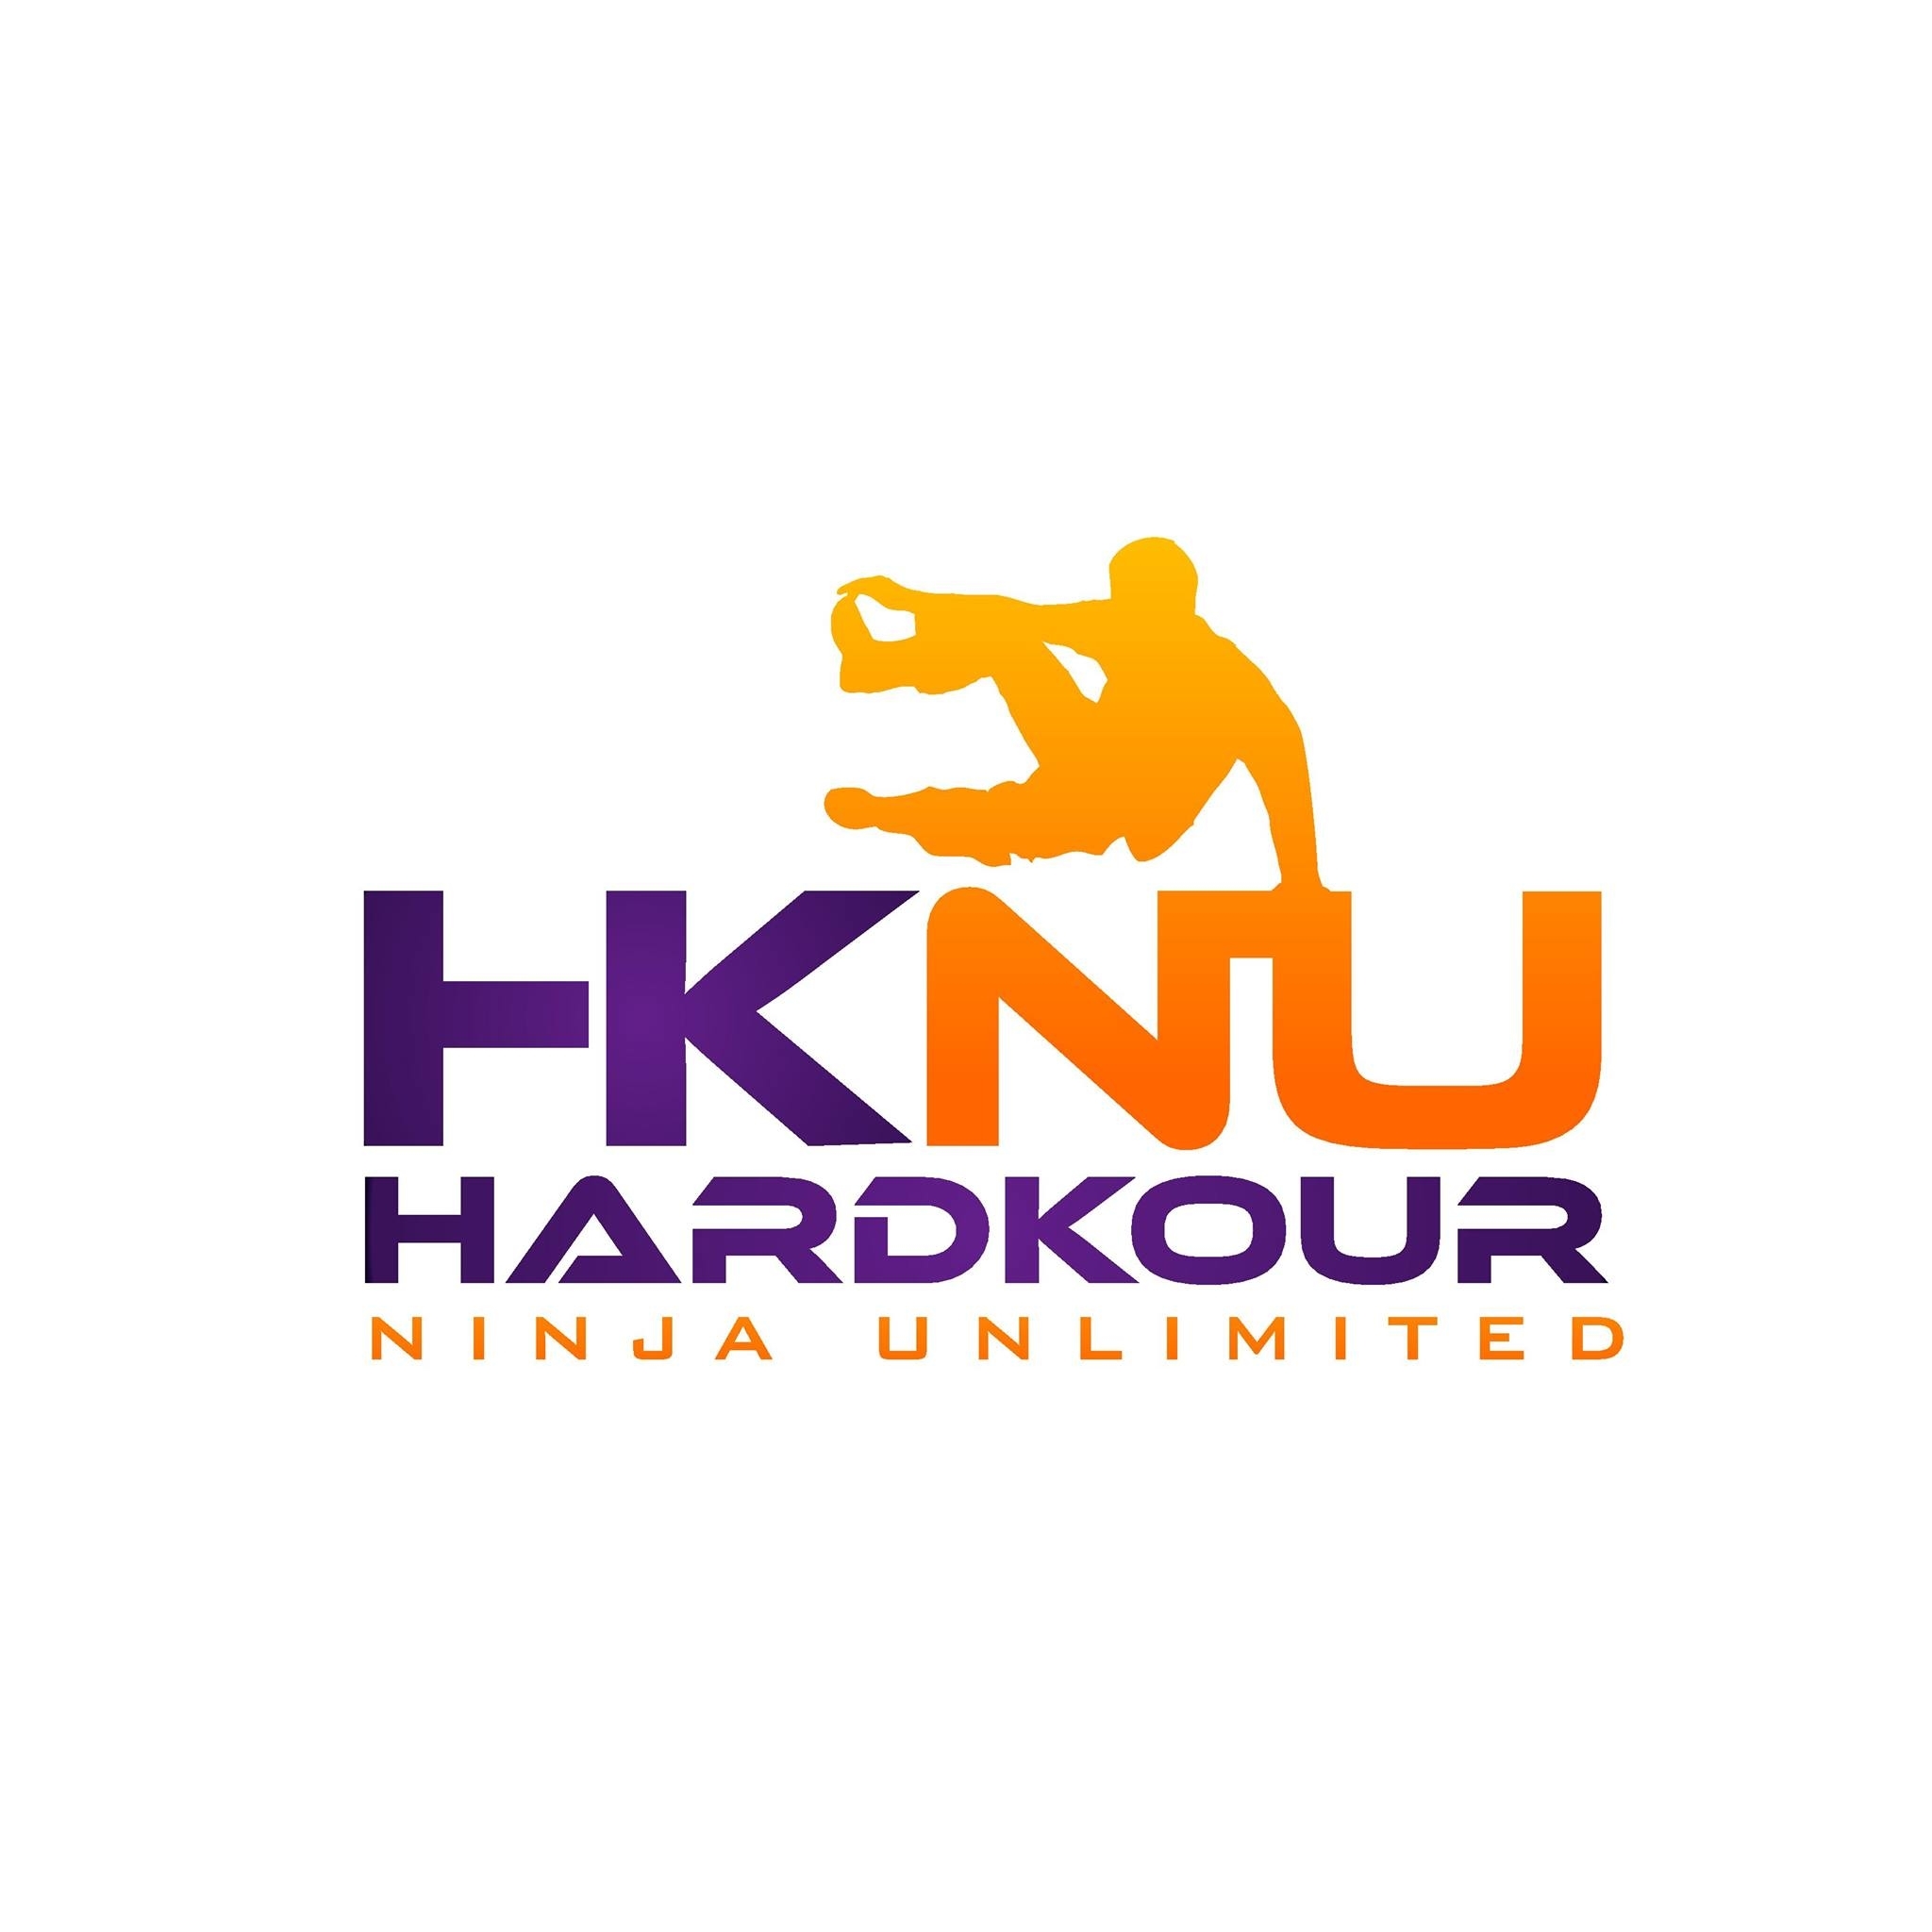 Hardkour Ninja Unlimited Coupons near me in Evansville, IN ...